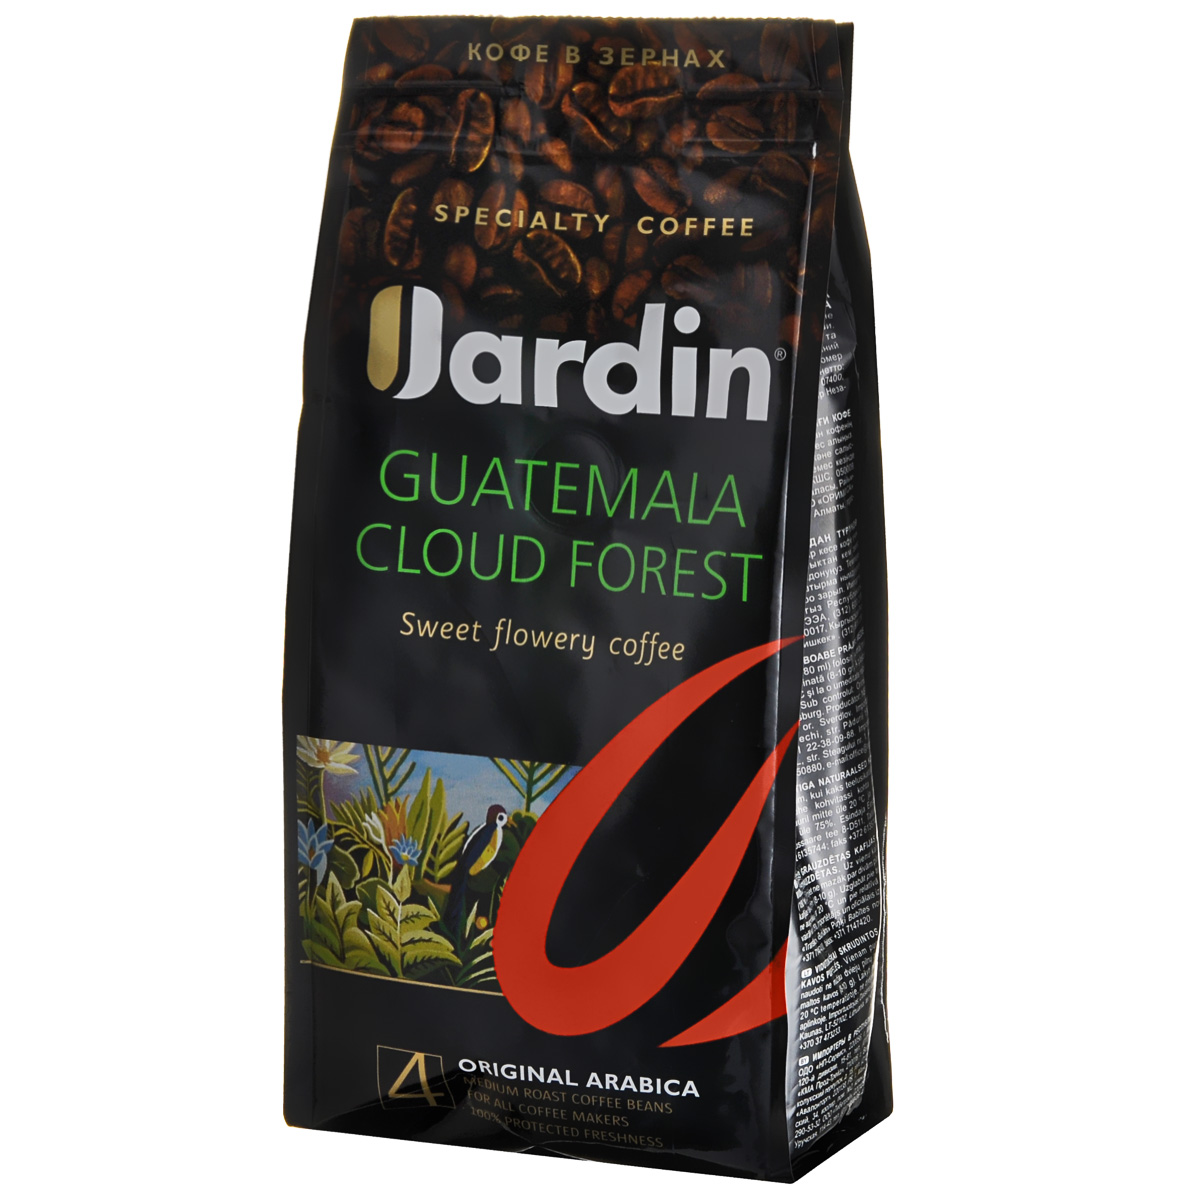 Jardin Guatemala Cloud Forest кофе в зернах, 250 г